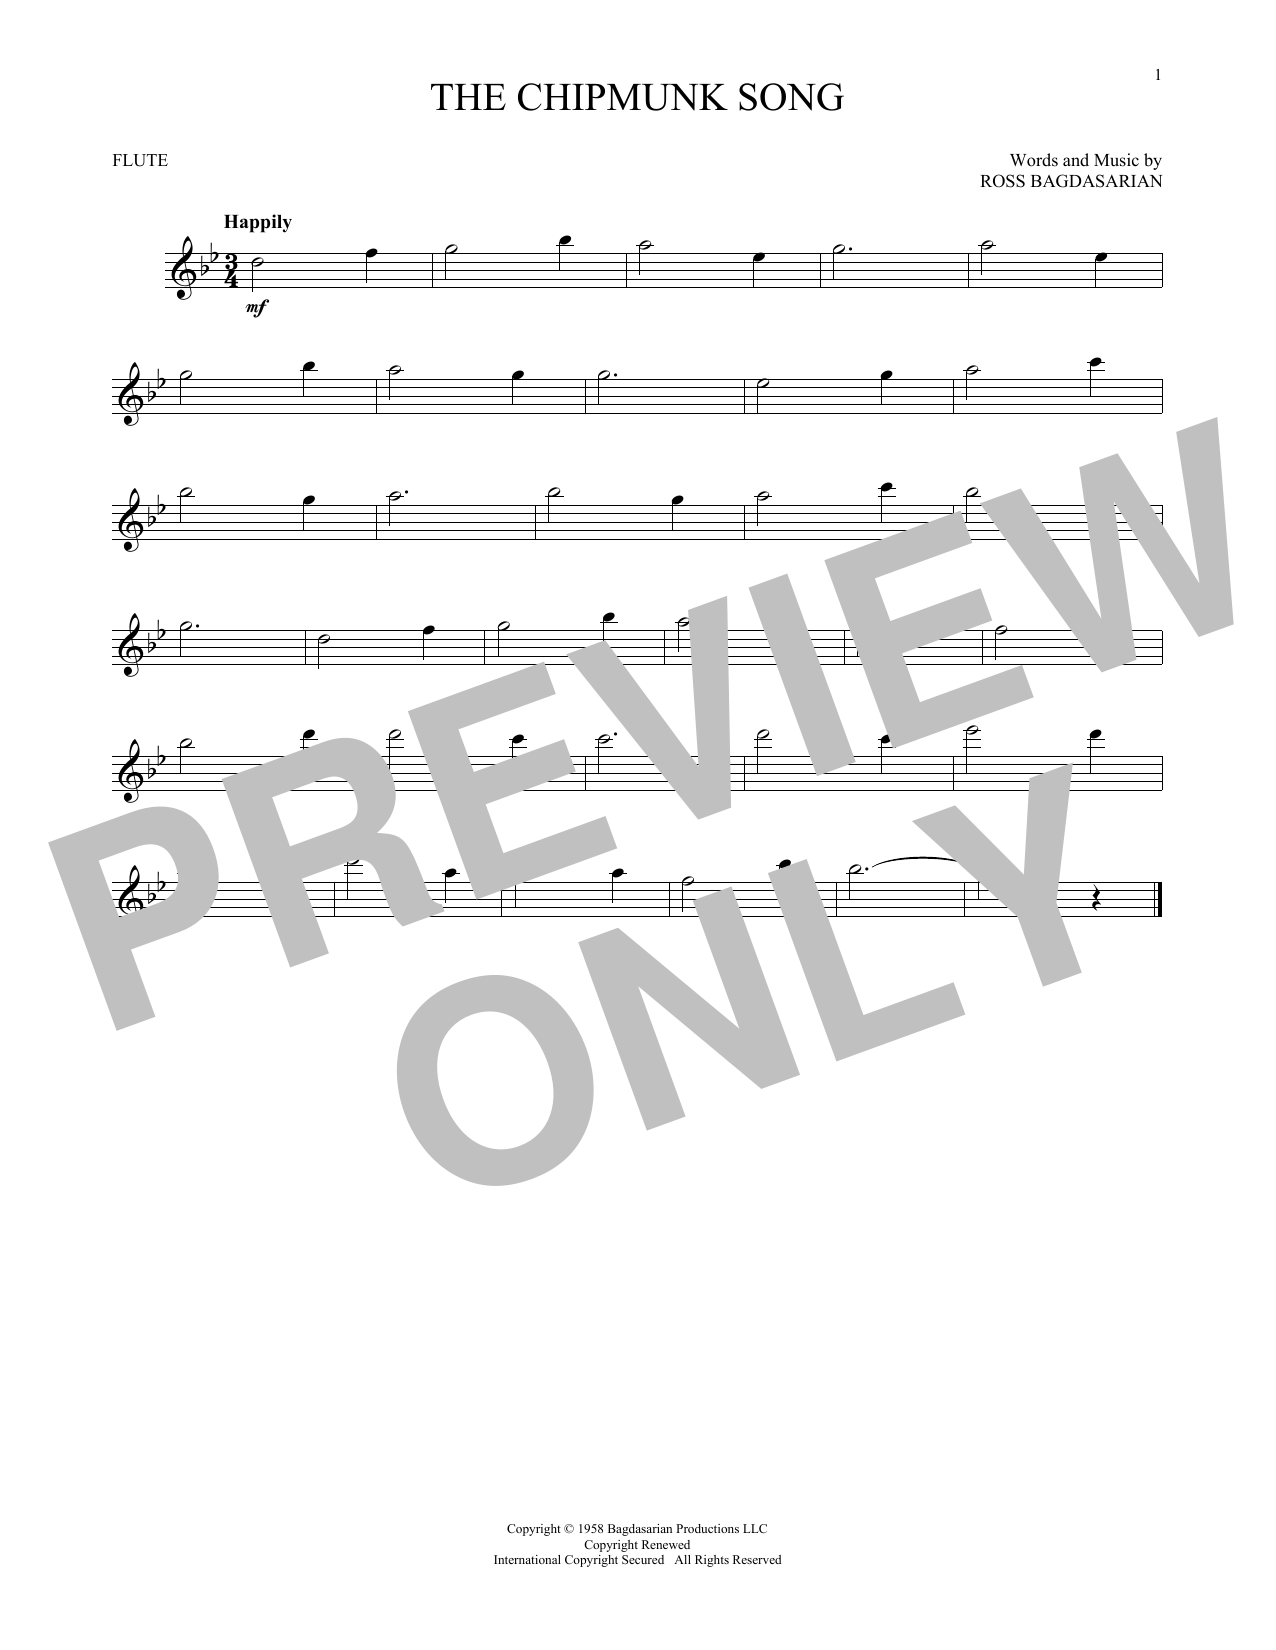 Ross Bagdasarian The Chipmunk Song Sheet Music Notes & Chords for Violin - Download or Print PDF